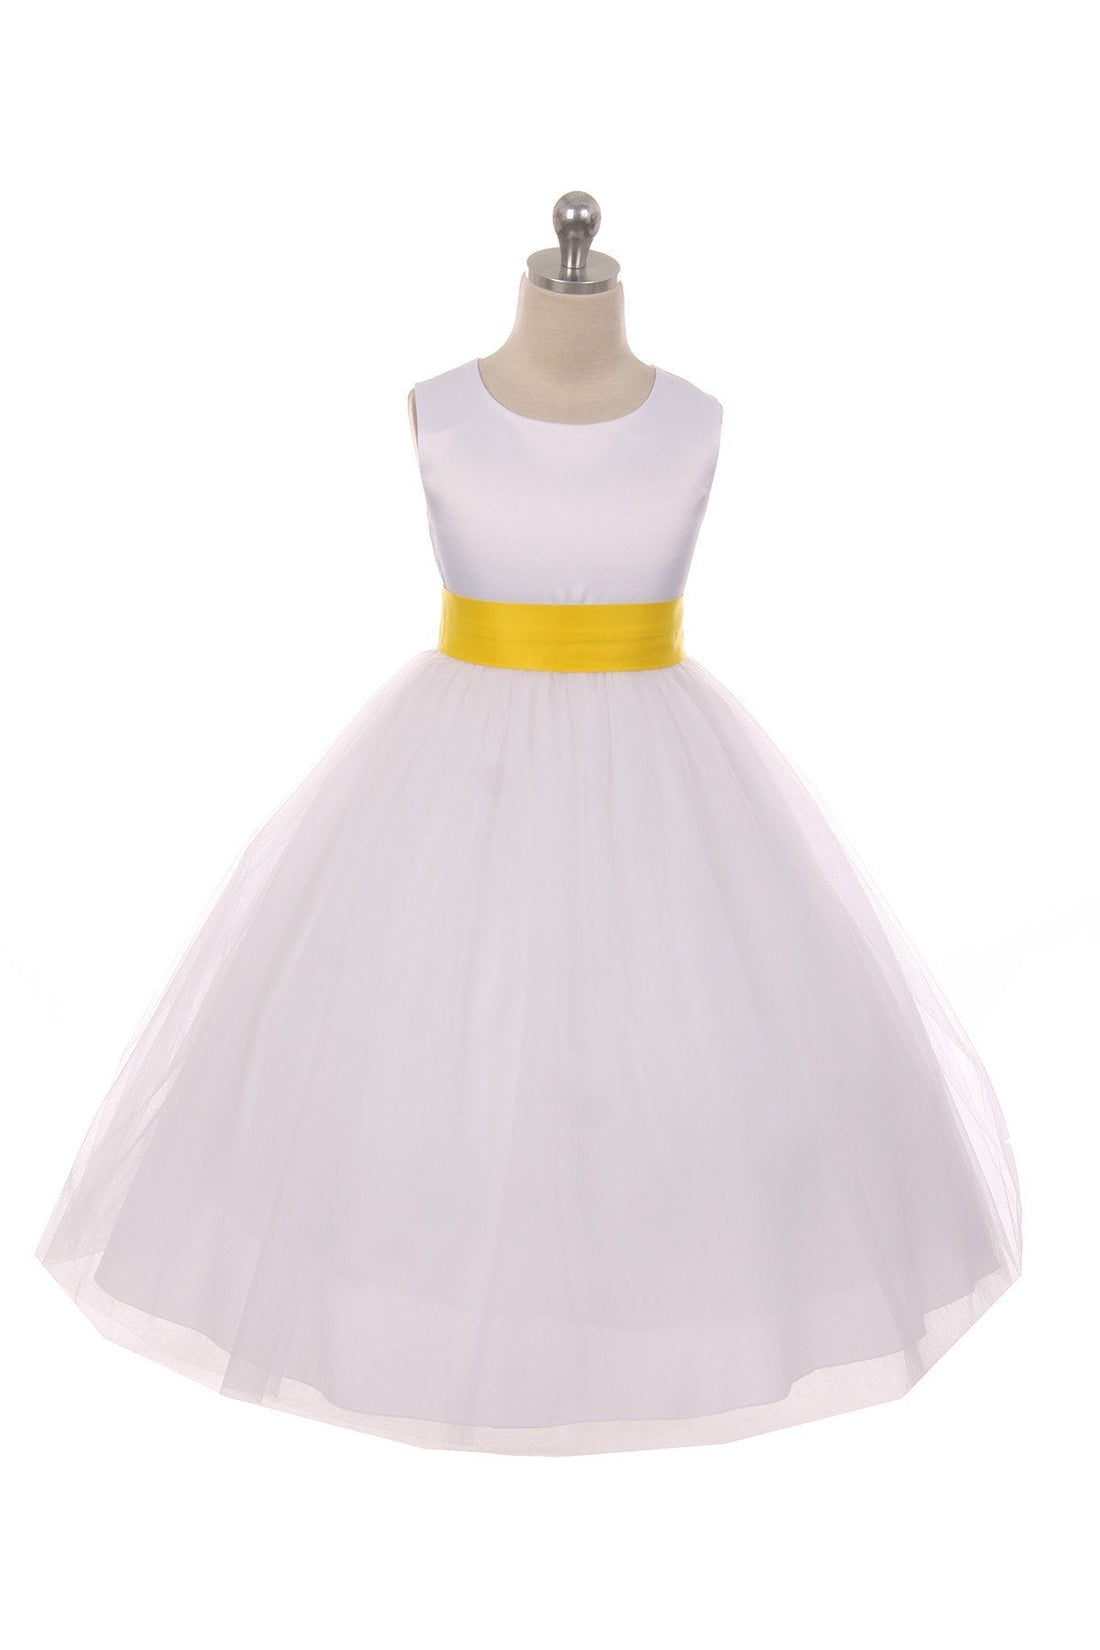 Yellow Girl Dress - Ivory Satin Sash Bow Girl Dress - AS411 Kids Dream